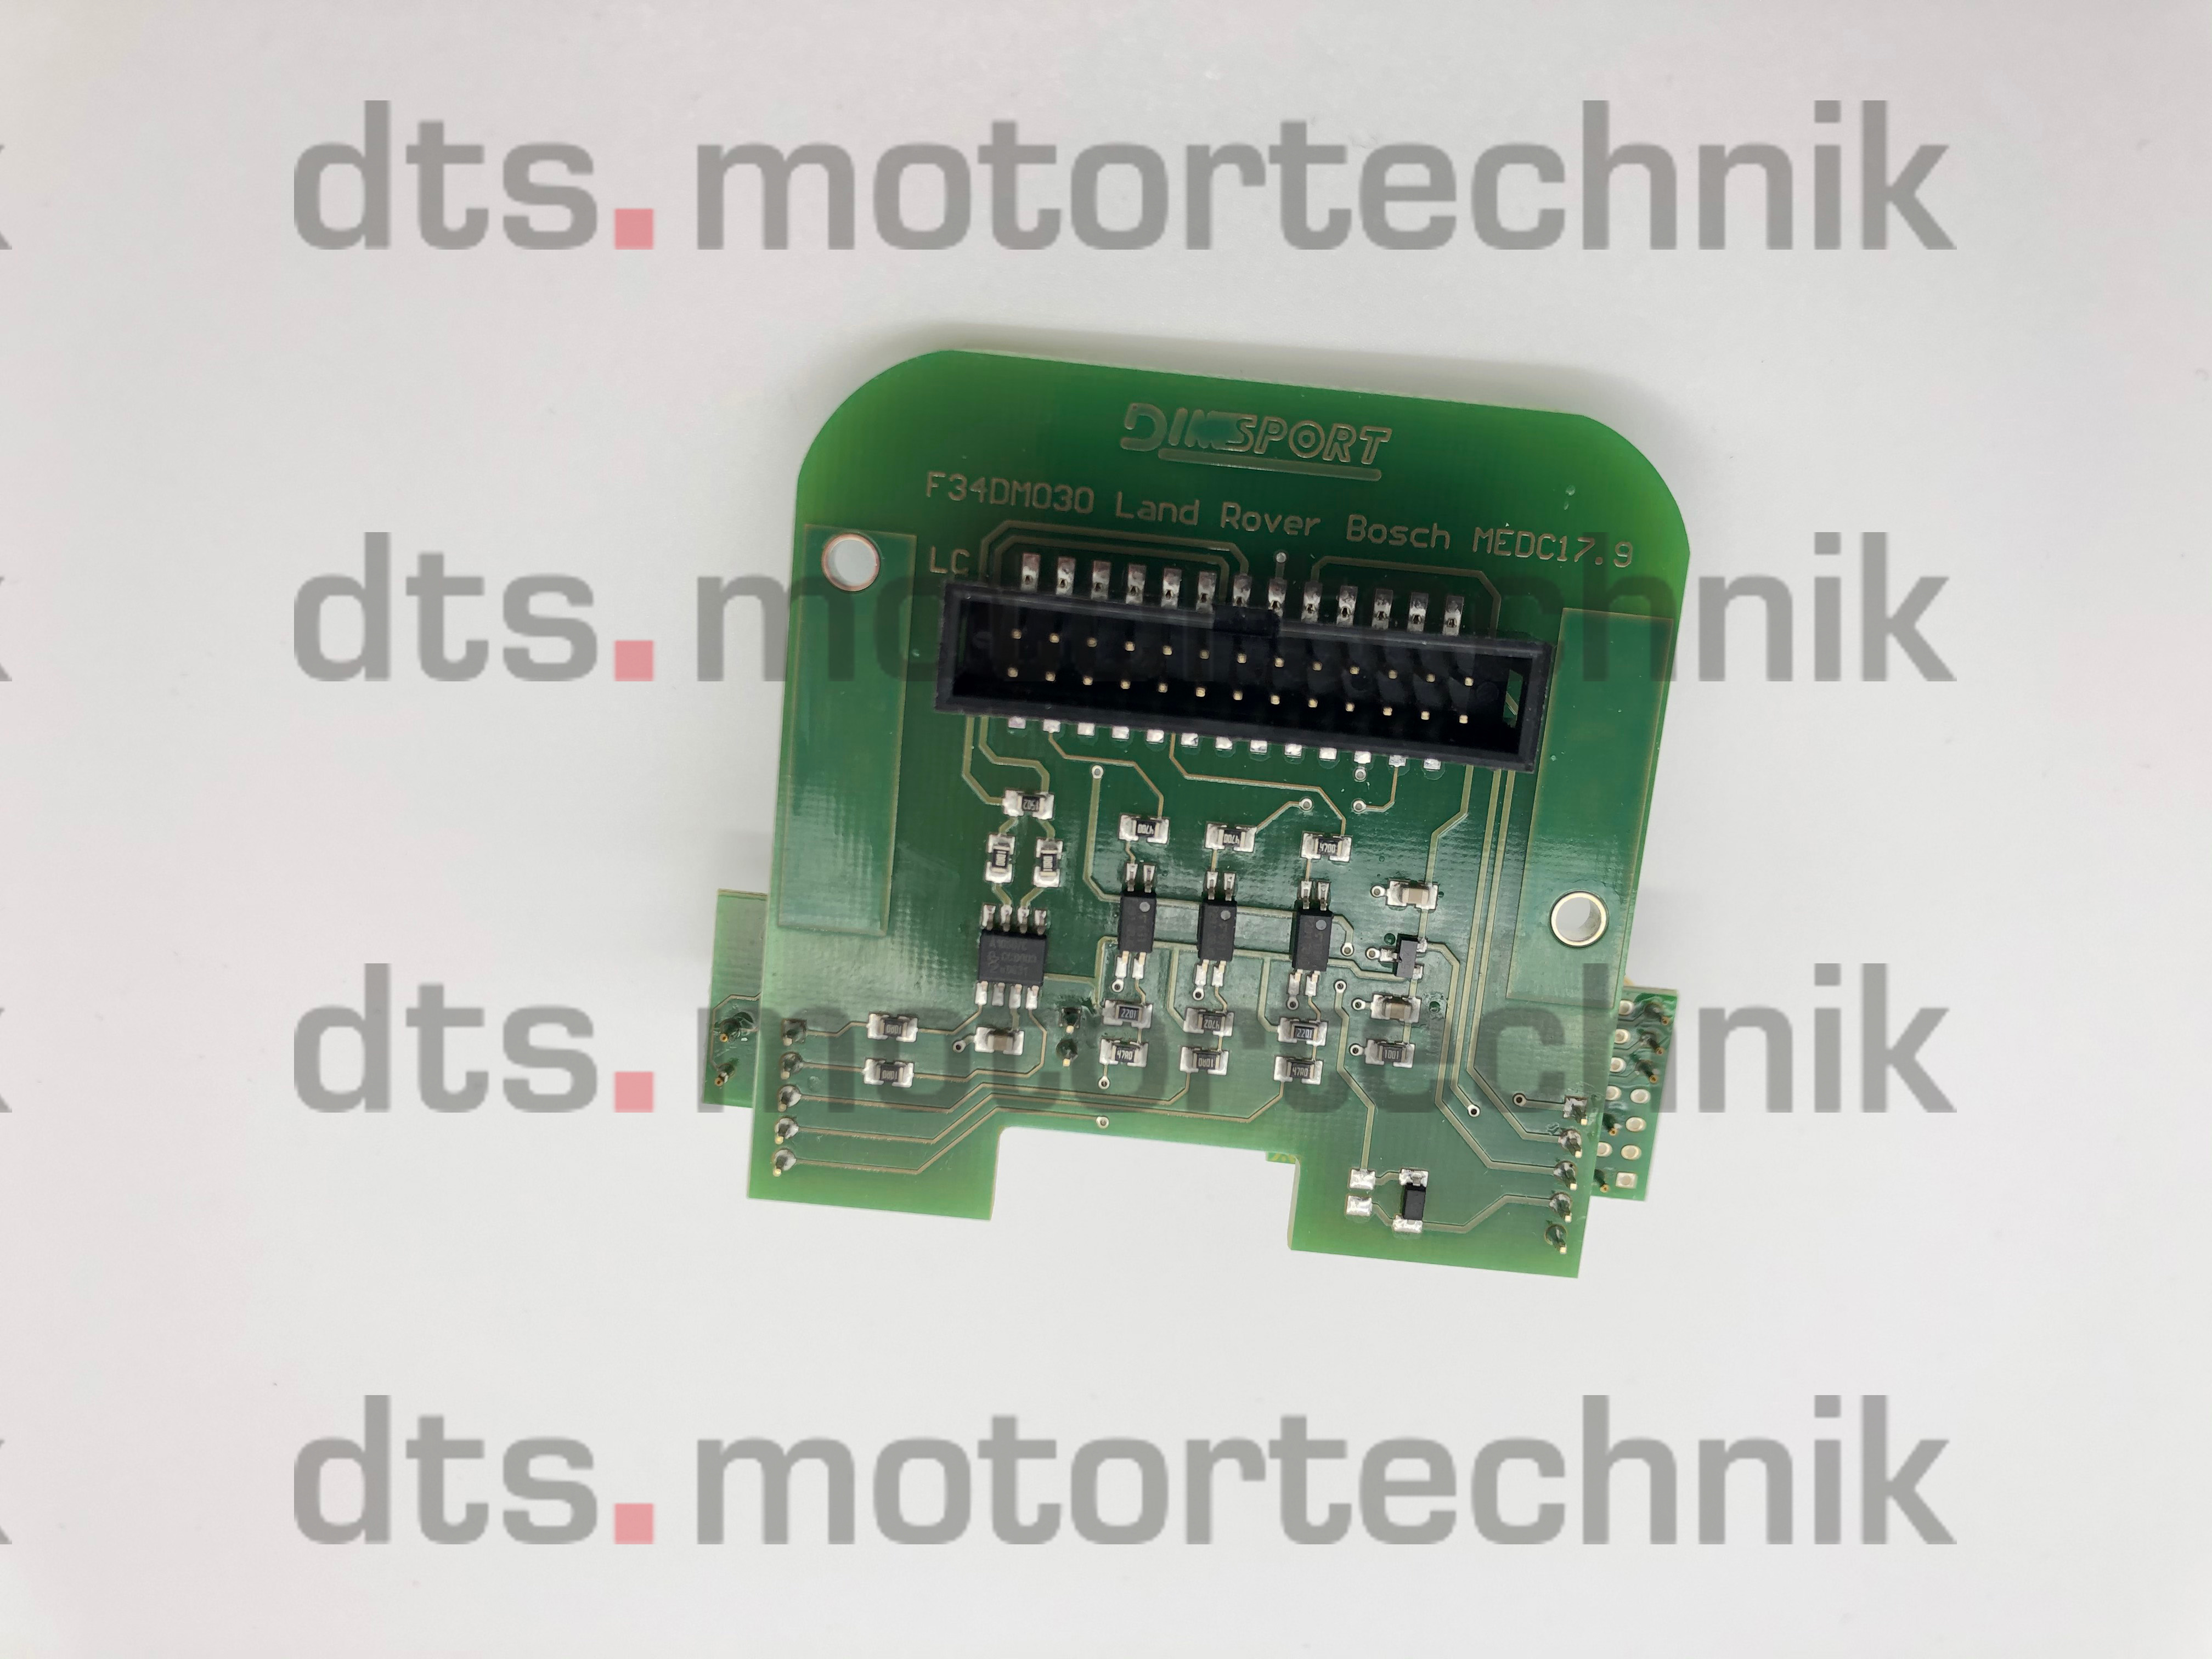 Infineon tricore (TF003) & ST Microelectronics (TF002) CPUs Terminaladapter-Komplettsett für CAR/LCV